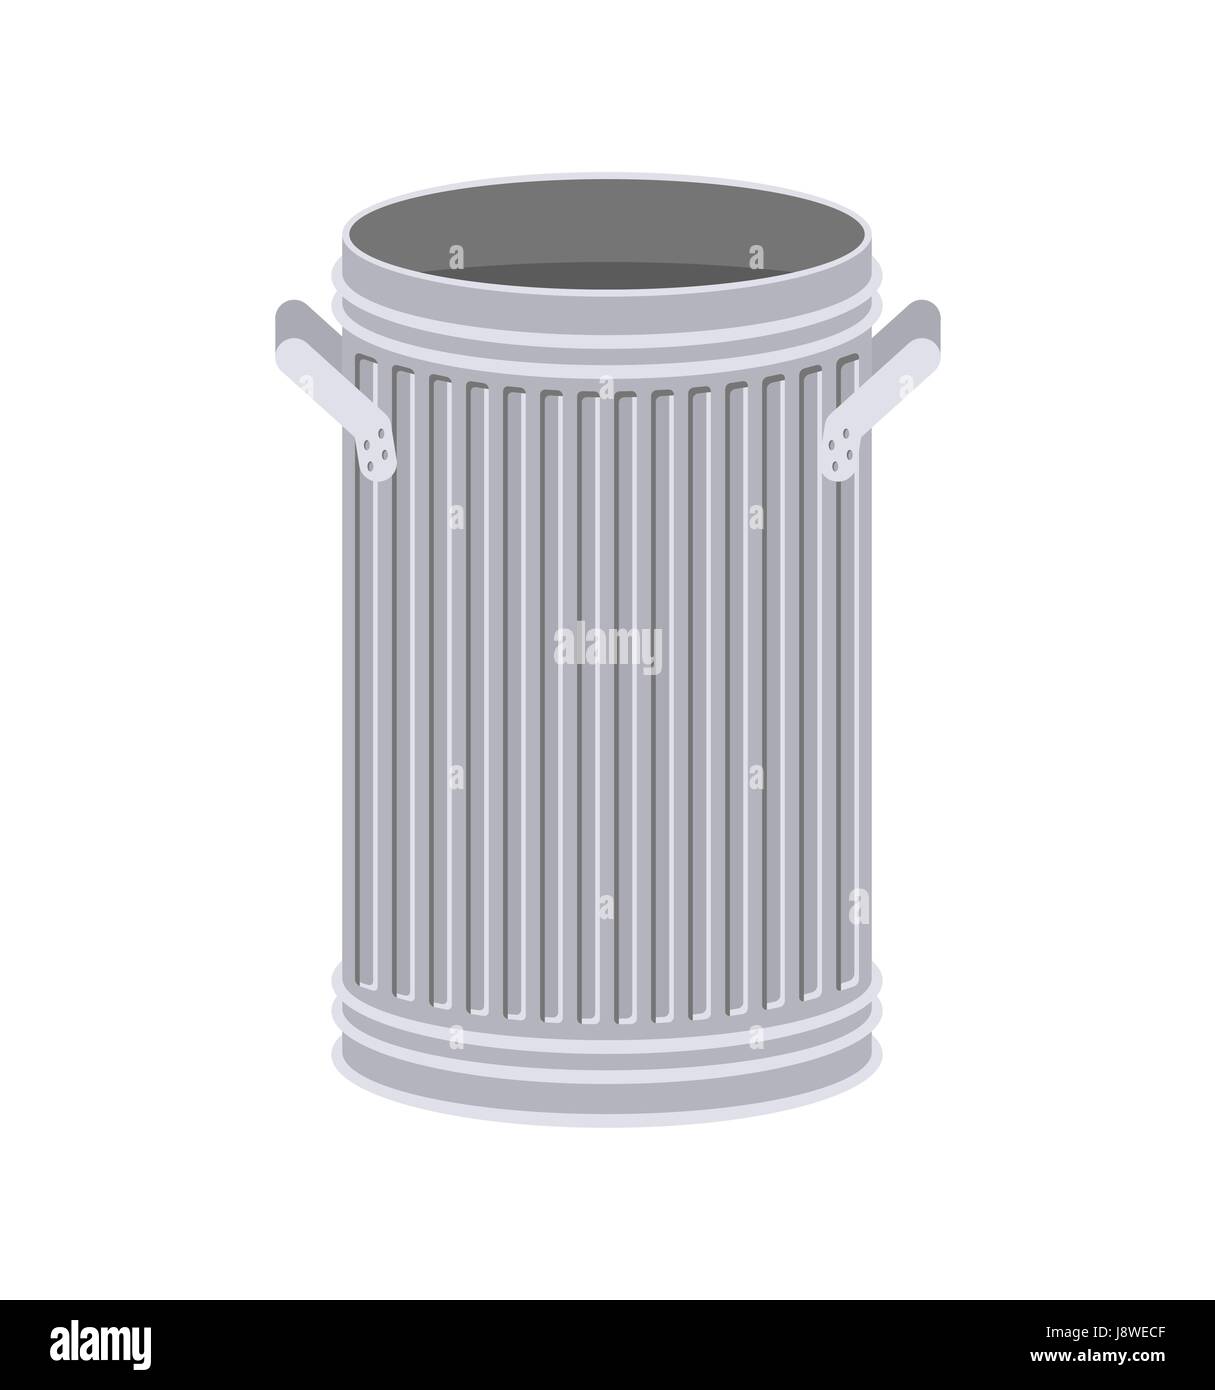 Trash can open isolated. Wheelie bin on white background. Dumpster iron  Stock Vector Image & Art - Alamy